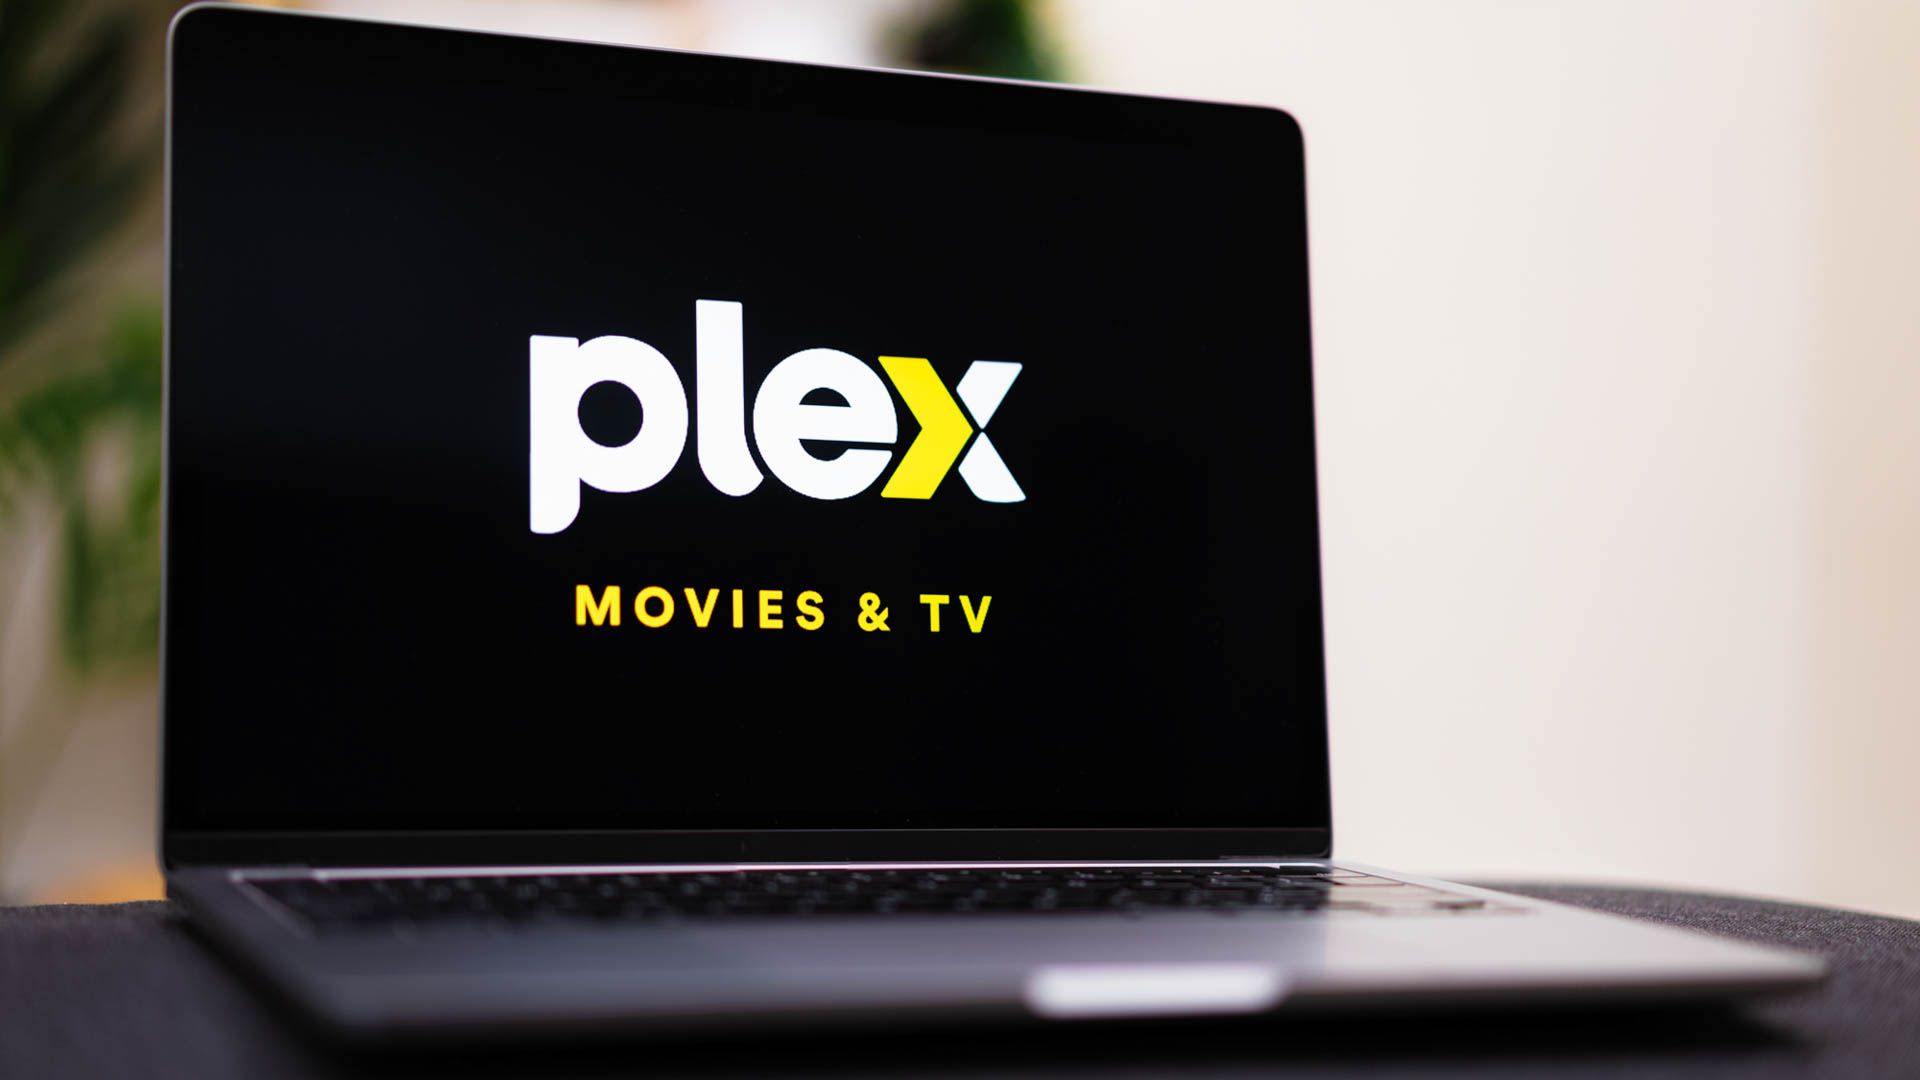 The Plex logo open on a laptop screen.